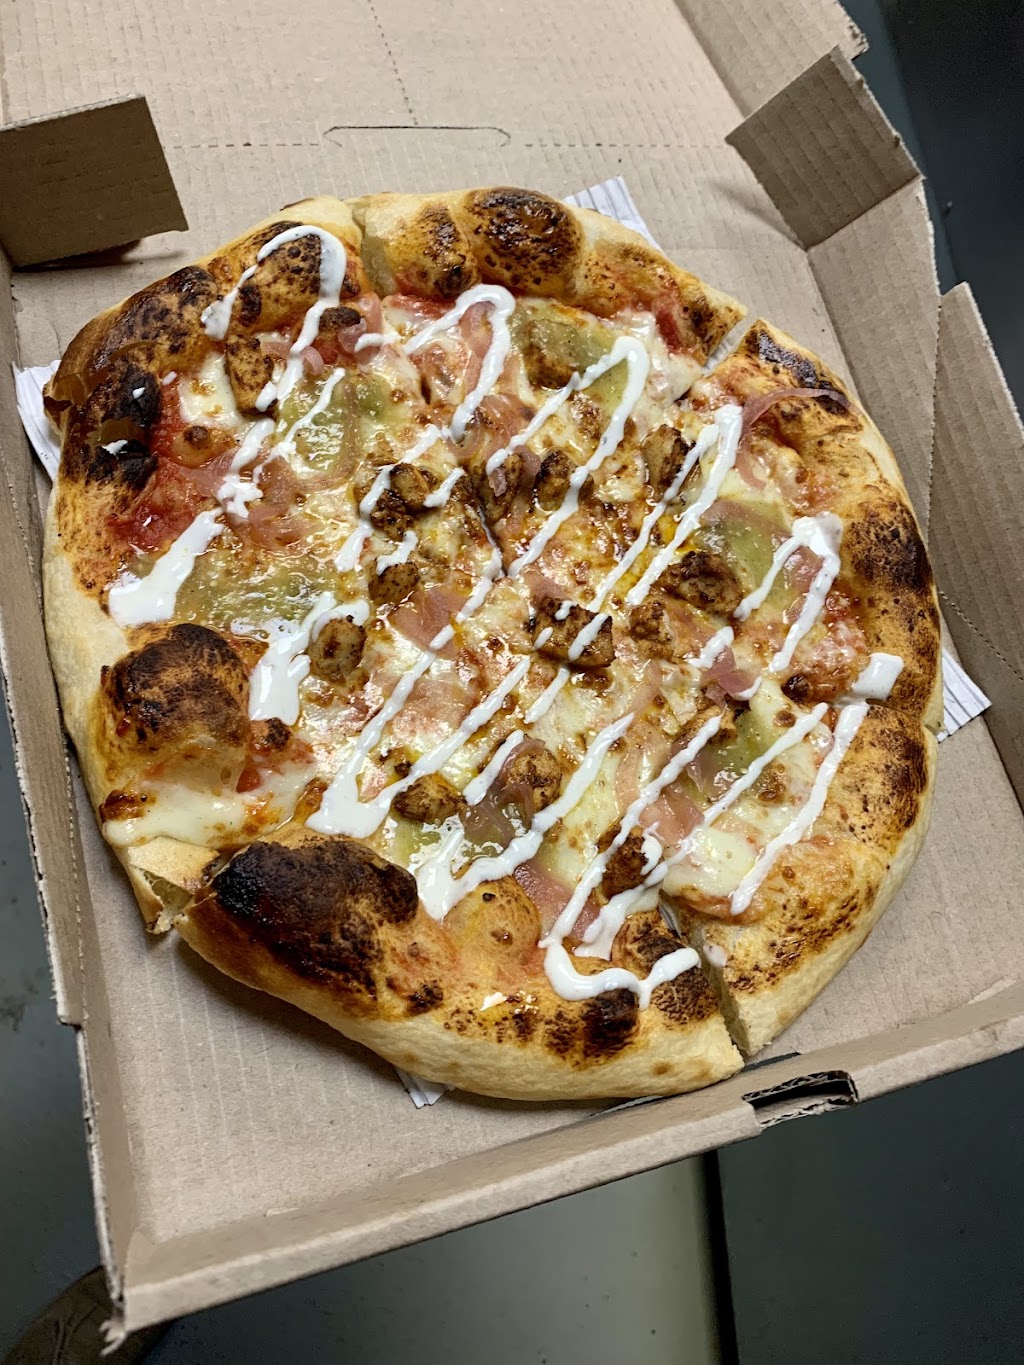 Pizza Nerds (Old Ottawa South) | 44 Seneca St, Ottawa, ON K1S 4X3, Canada | Phone: (613) 422-0091